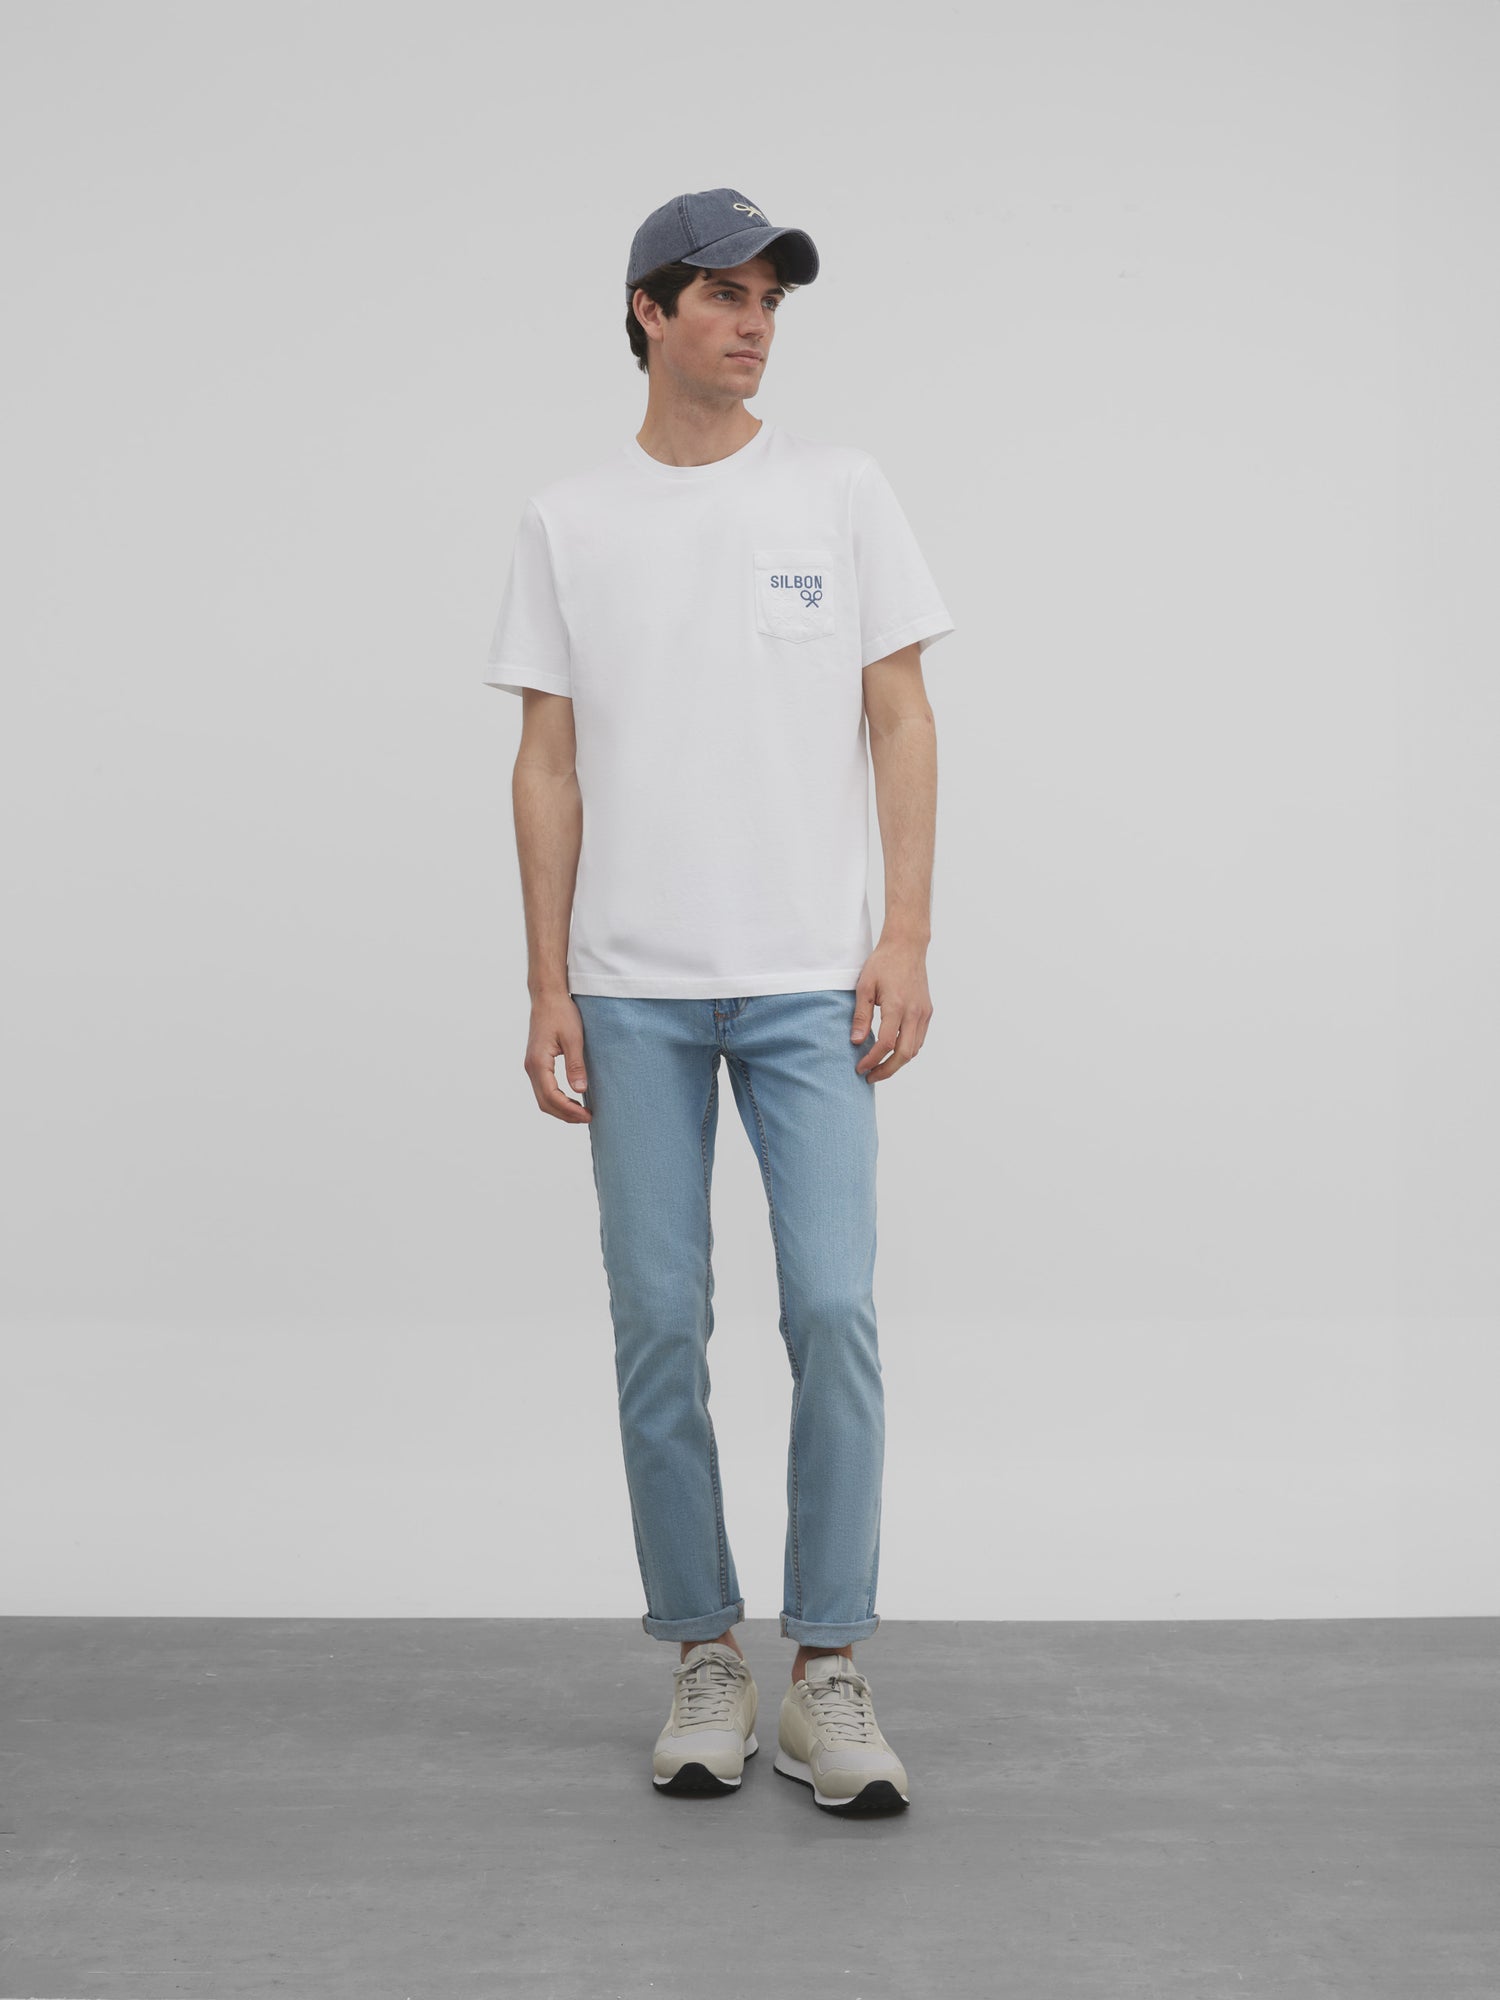 Silbon t-shirt with white mini rackets pocket